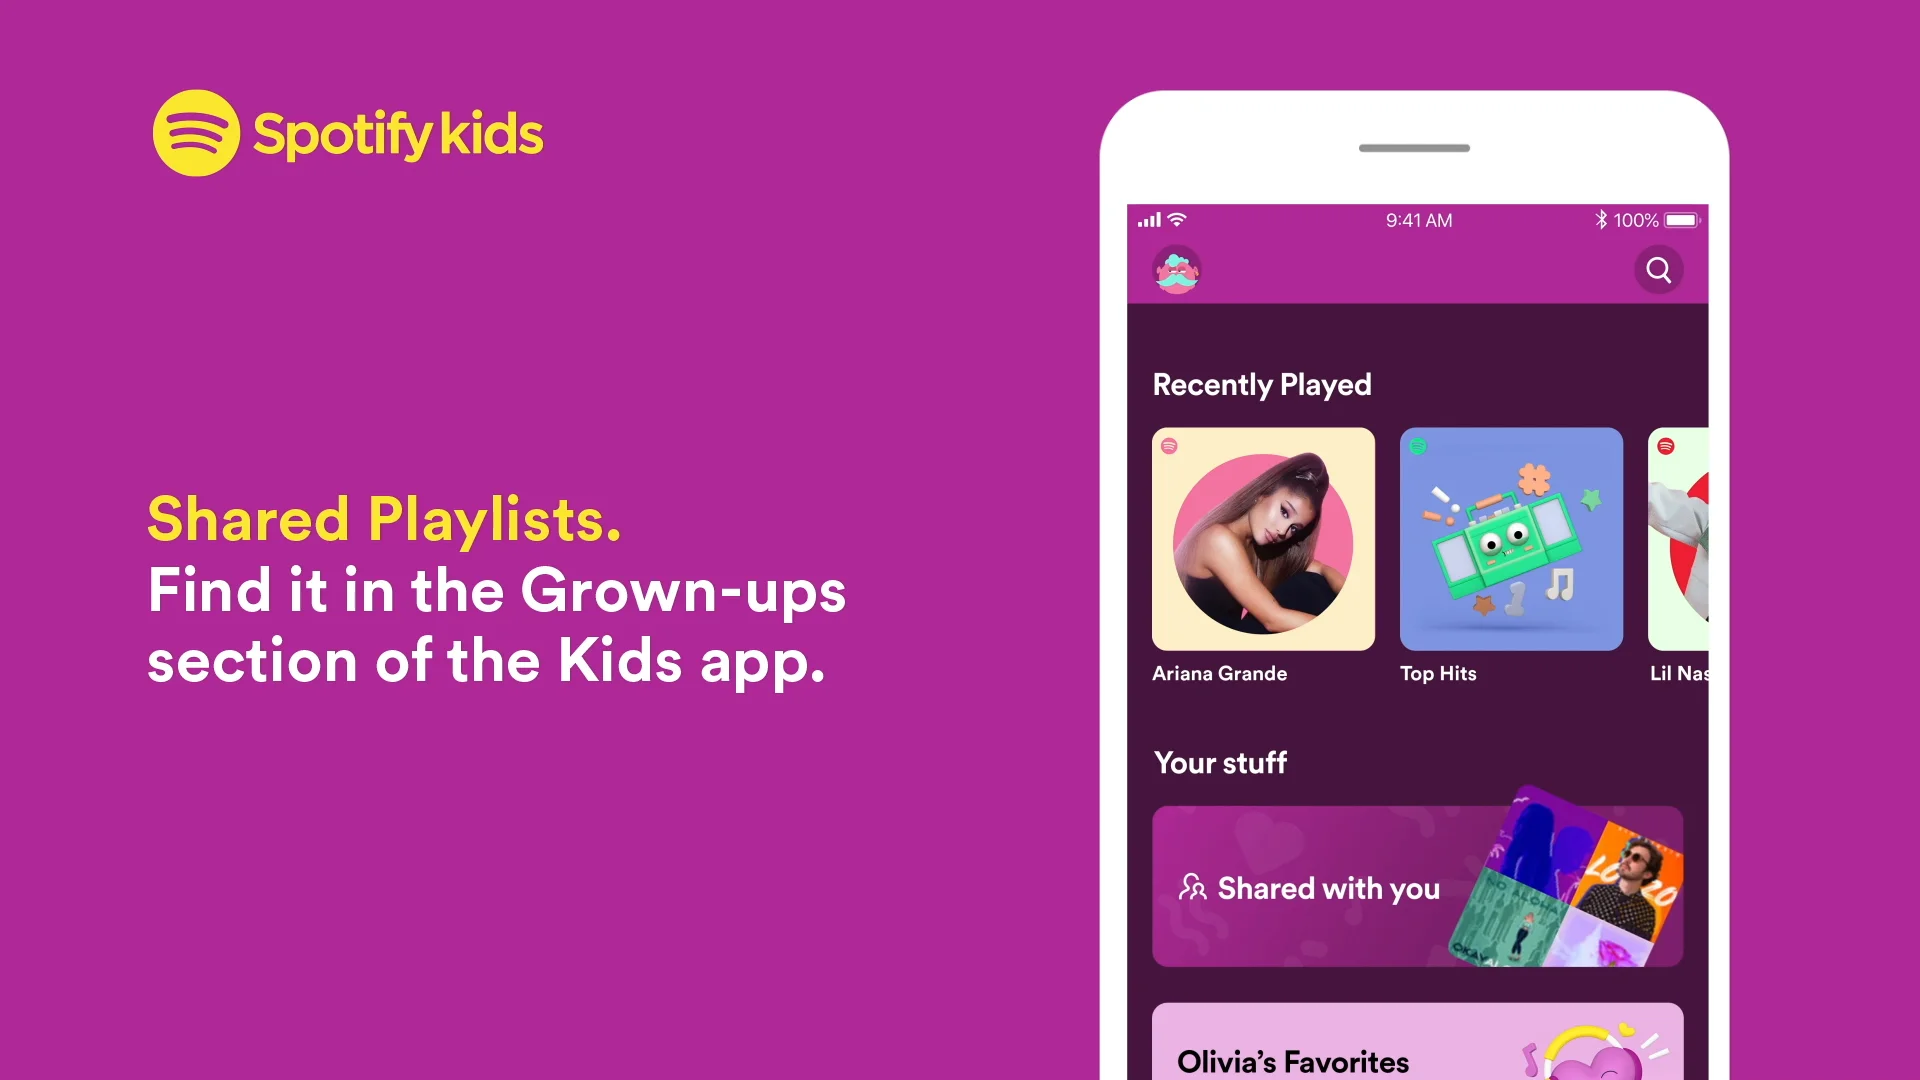 Spotify Kids Playlist Sharing Feature on Vimeo